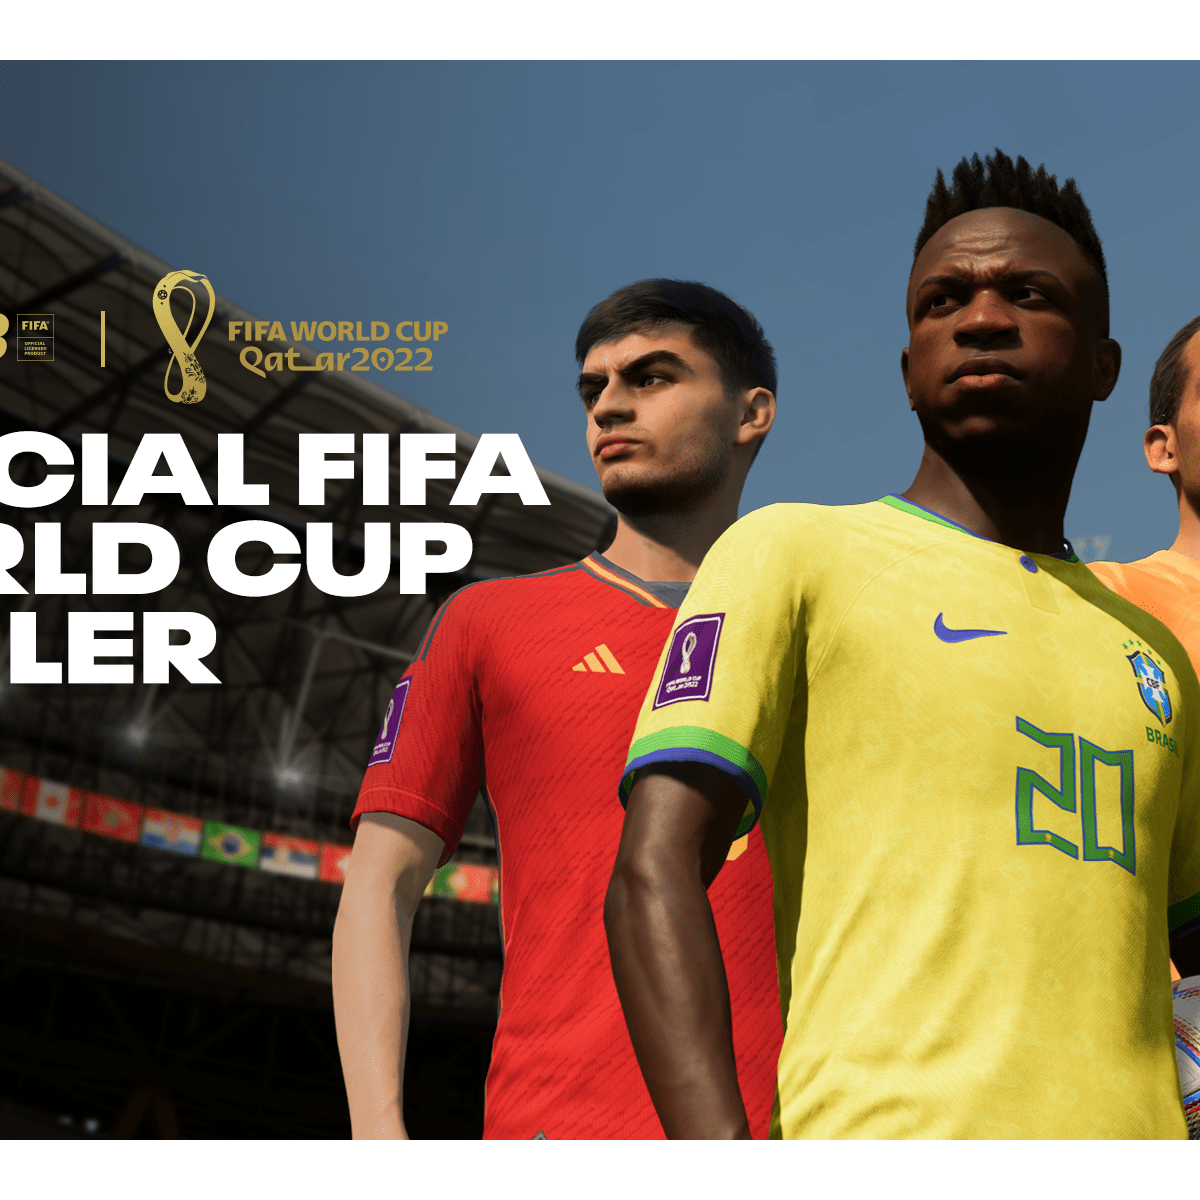 EA Sports FIFA 23 Global Series apresenta novas séries de torneios - Record  Gaming - Jornal Record